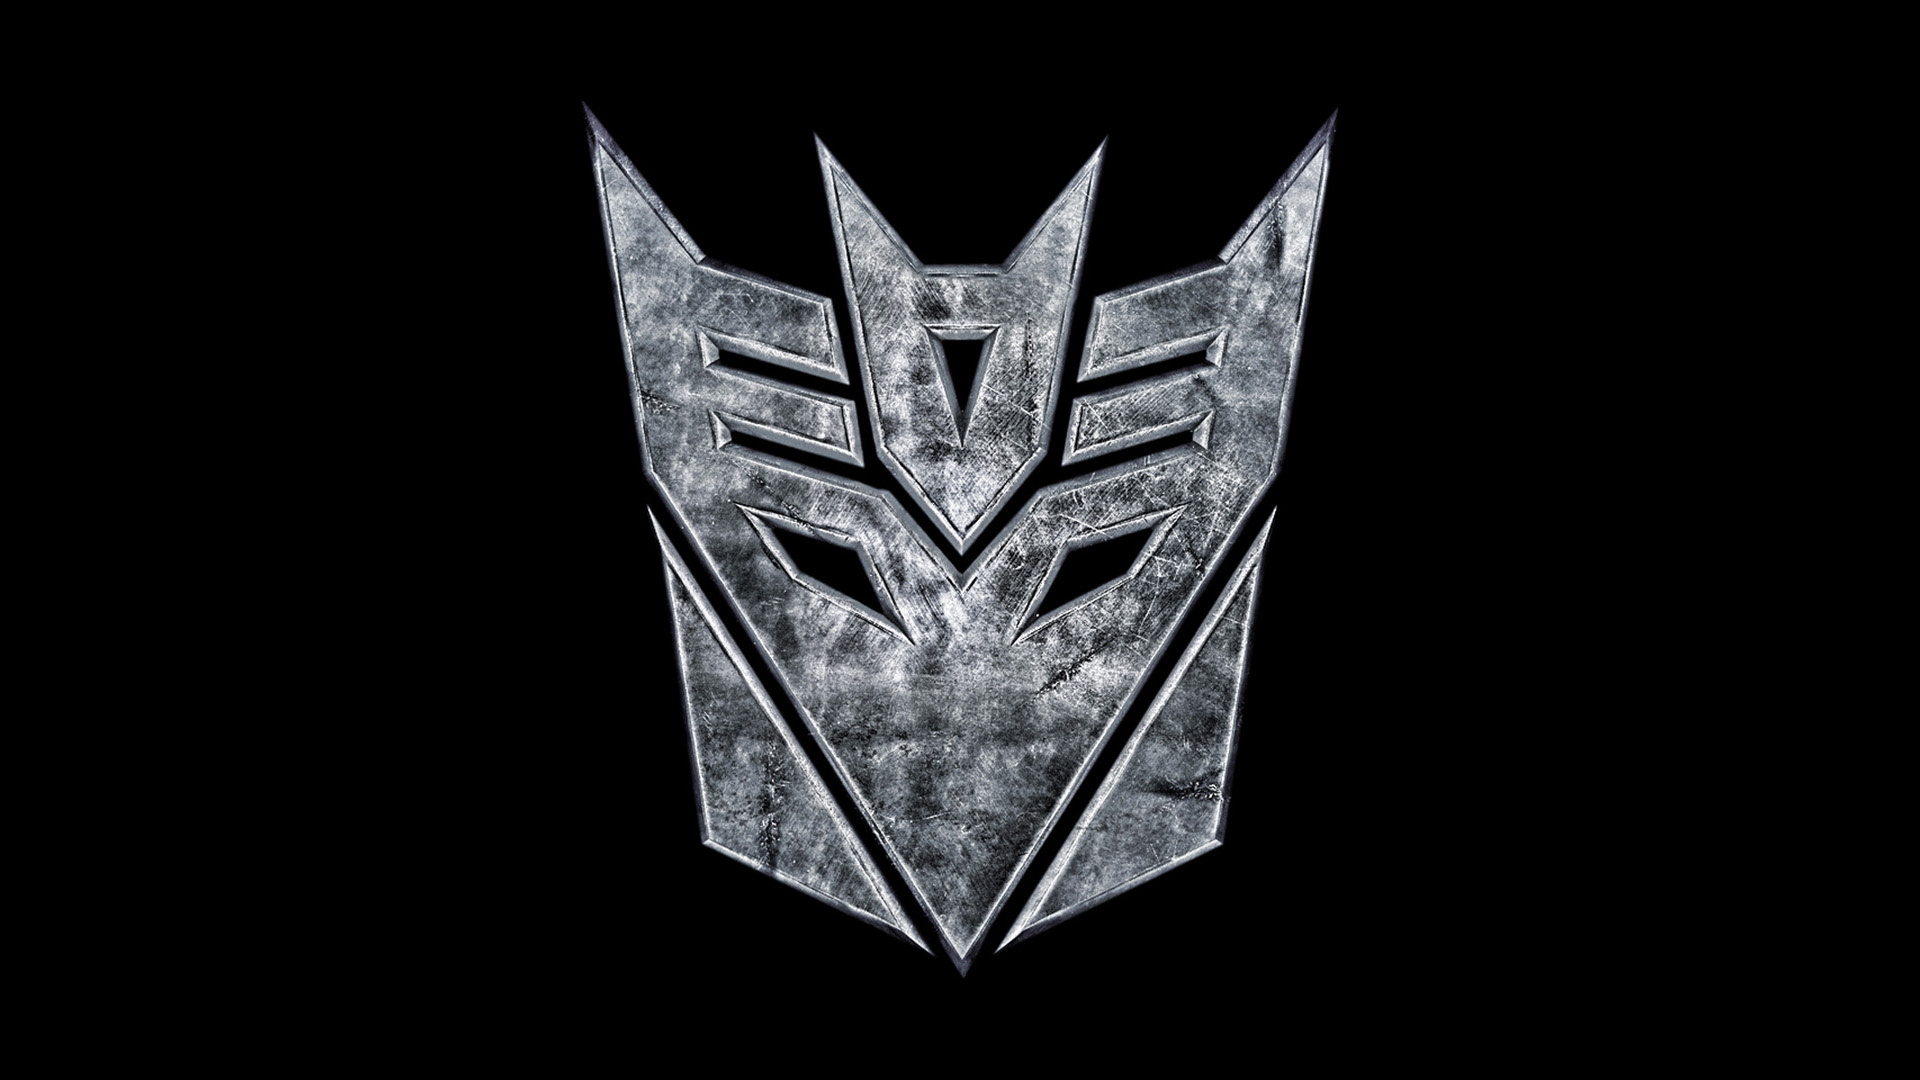  transformers decepticon logo hd wallpapertransformers decepticon logo